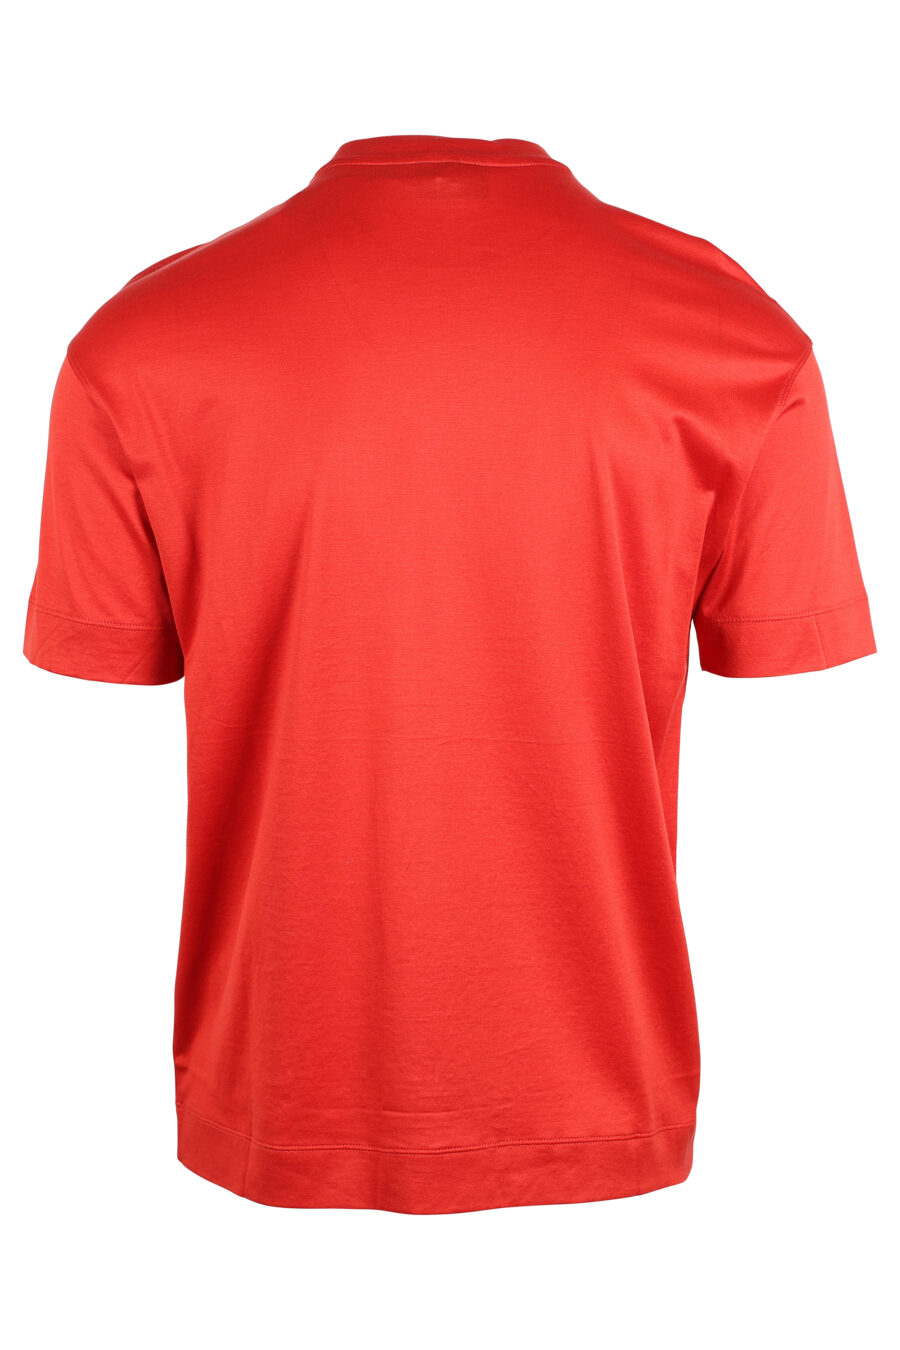 Red T-shirt with monochrome maxilogo - IMG 4746